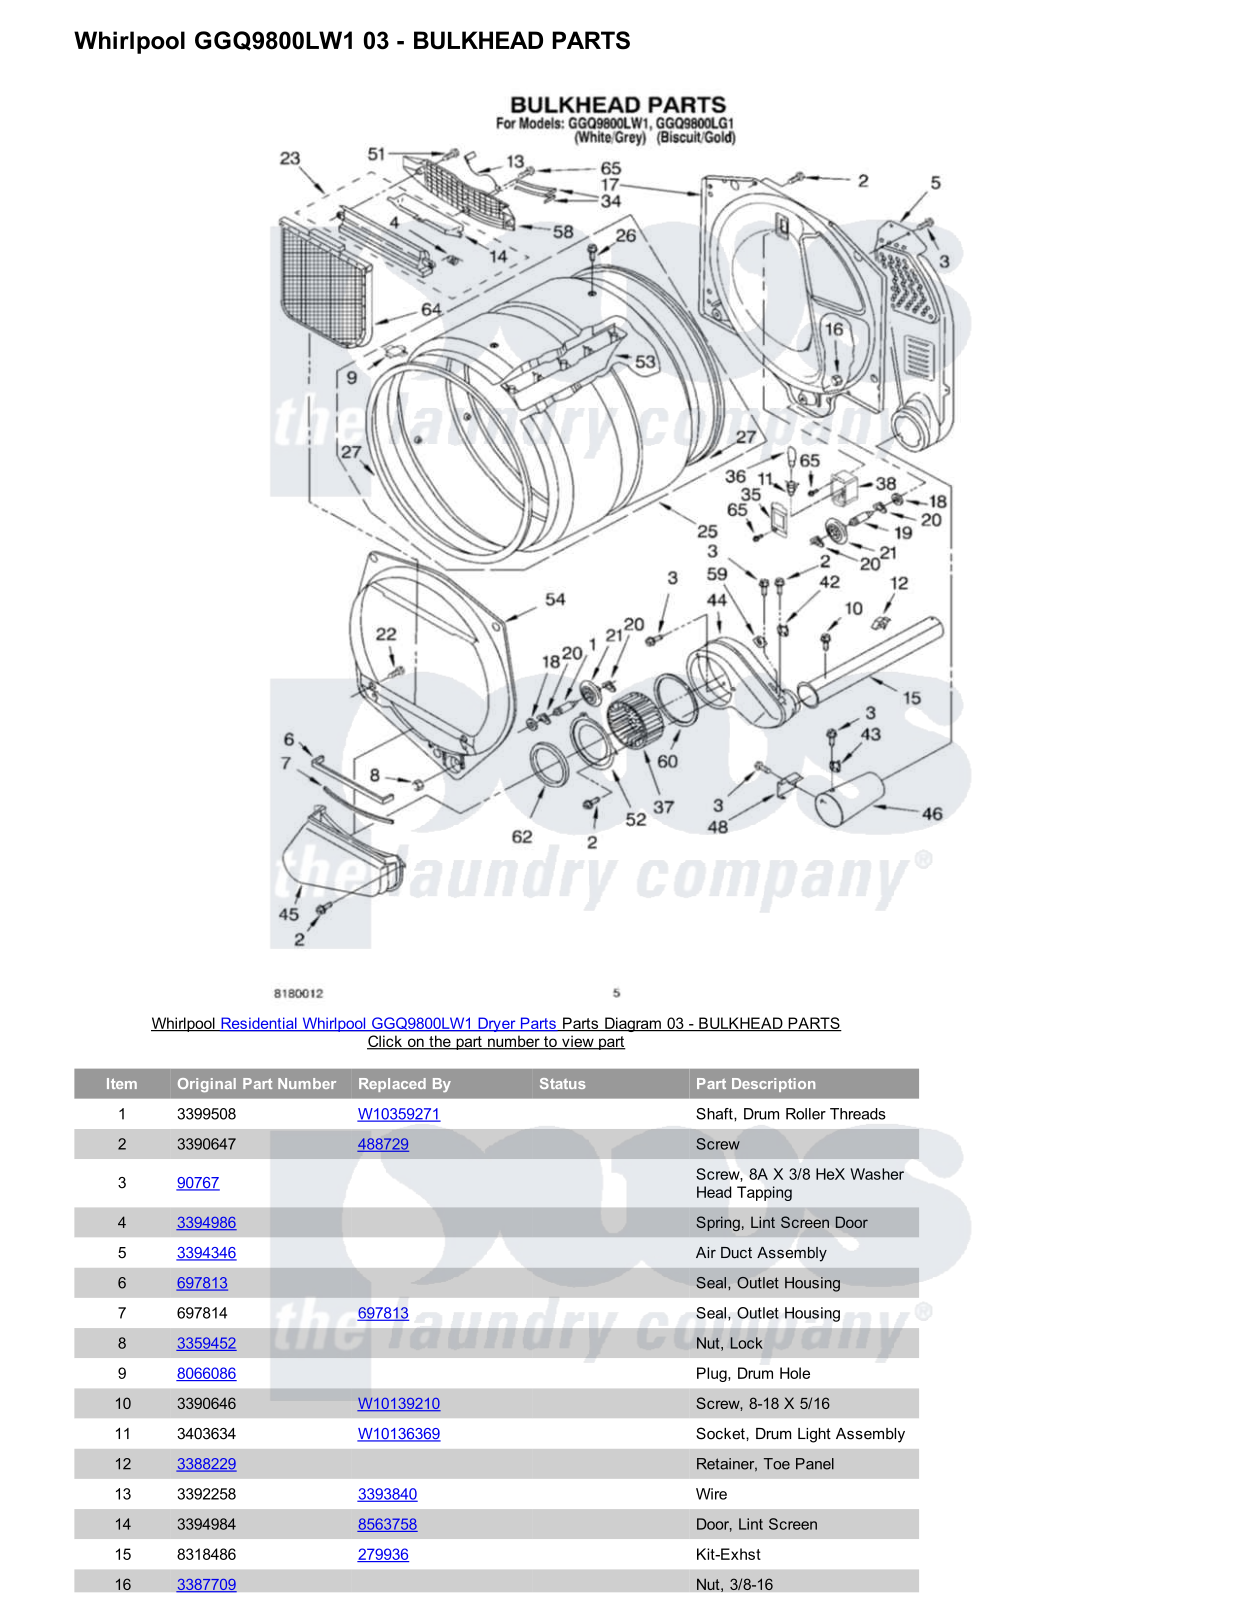 Whirlpool GGQ9800LW1 Parts Diagram